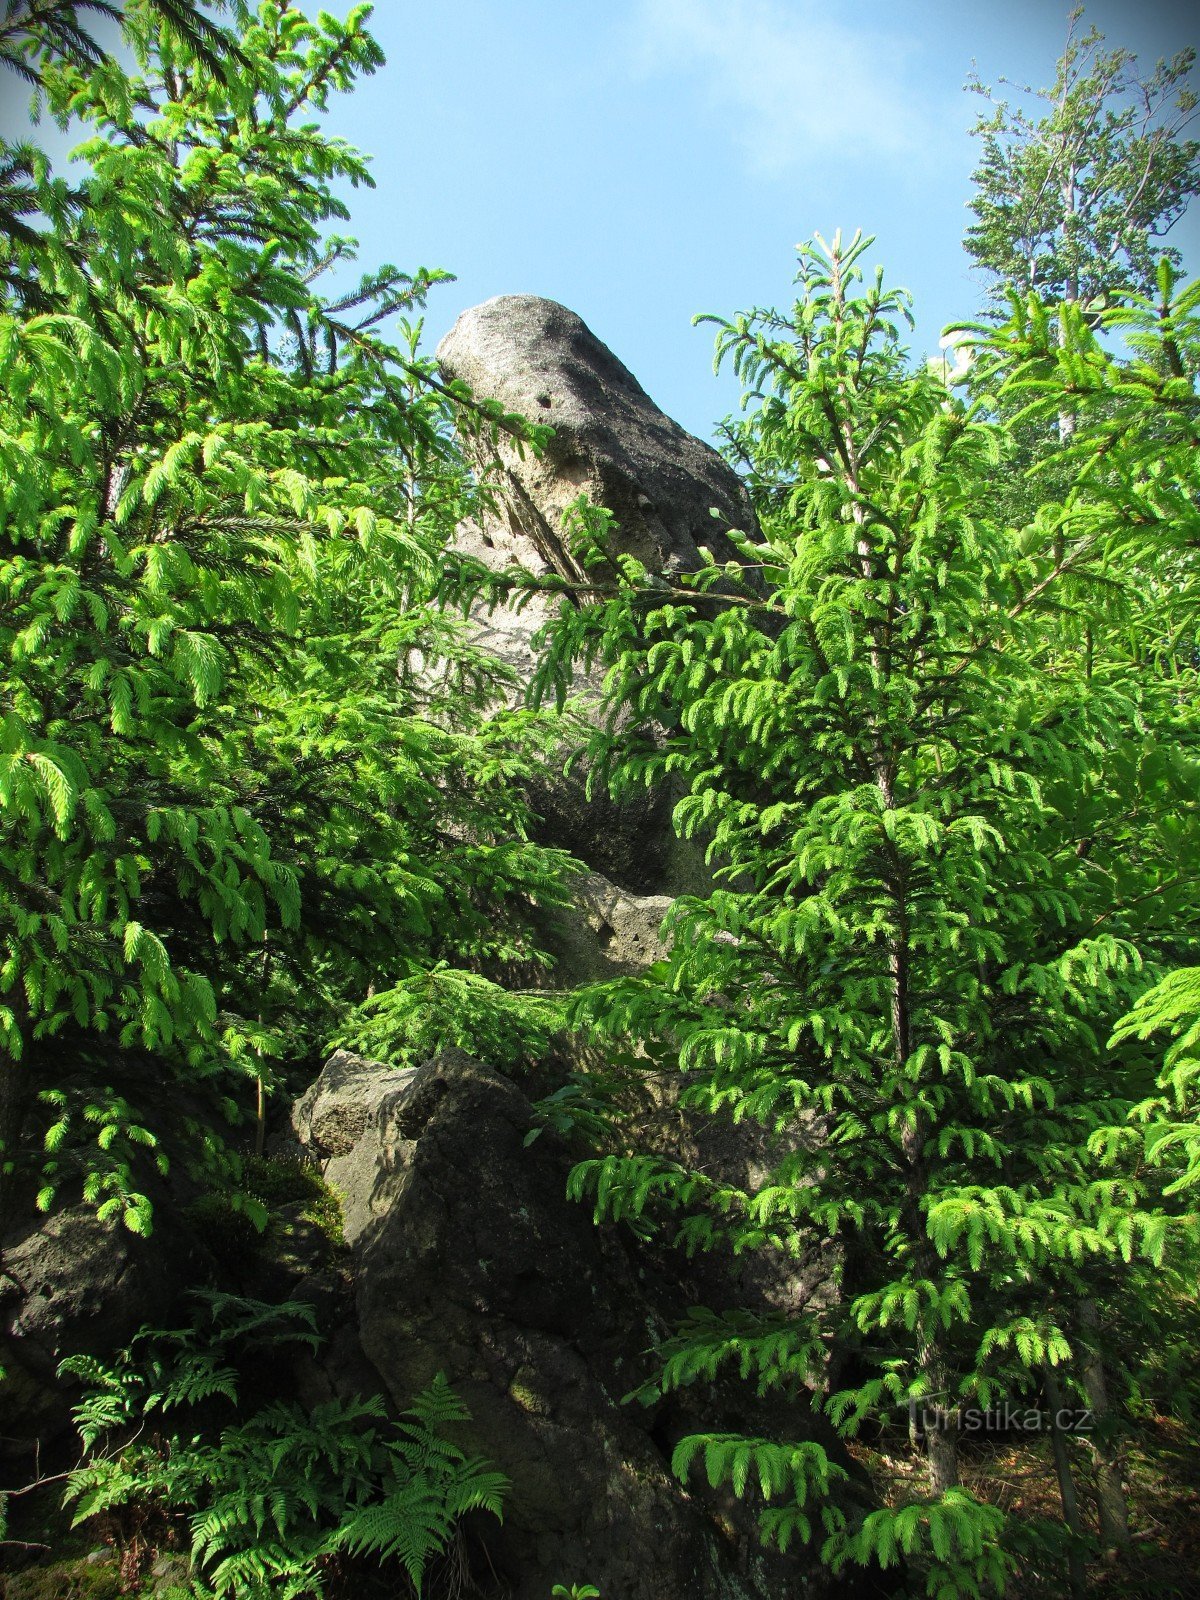 Hošťálková - Rarášek 附近的岩石